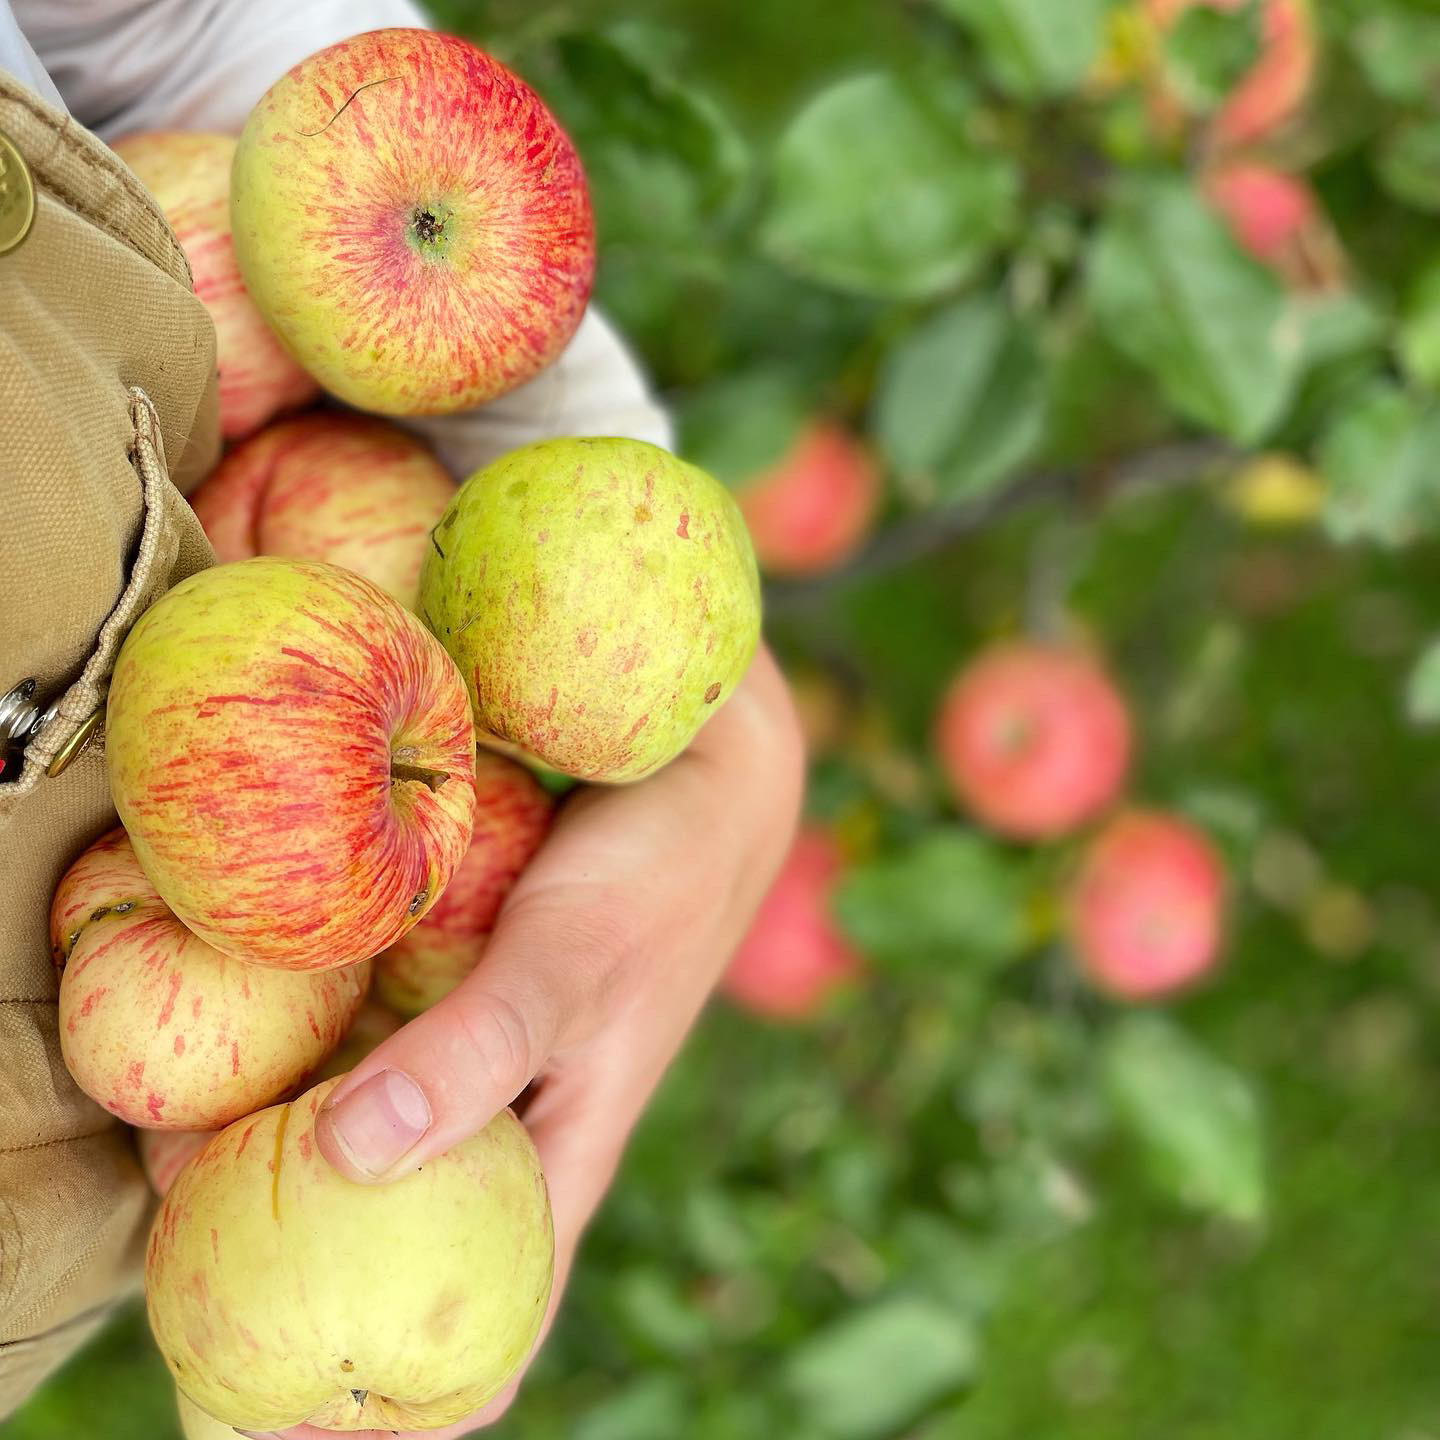 Storage supplies of SweeTango apples should last through July”